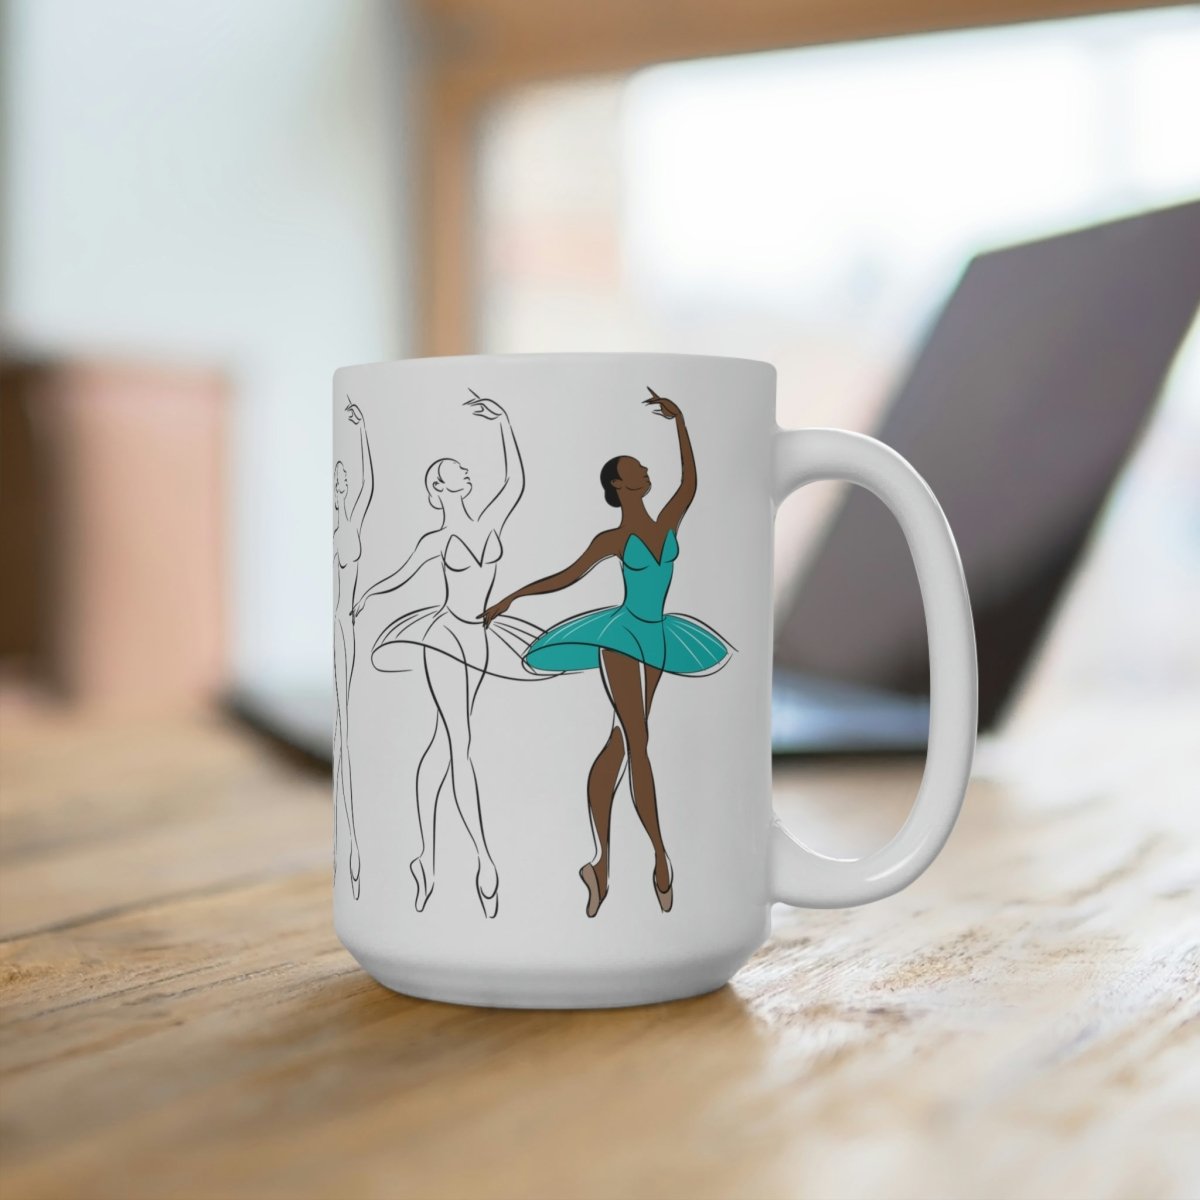 Ballerina Sketch Mug - The Trini Gee